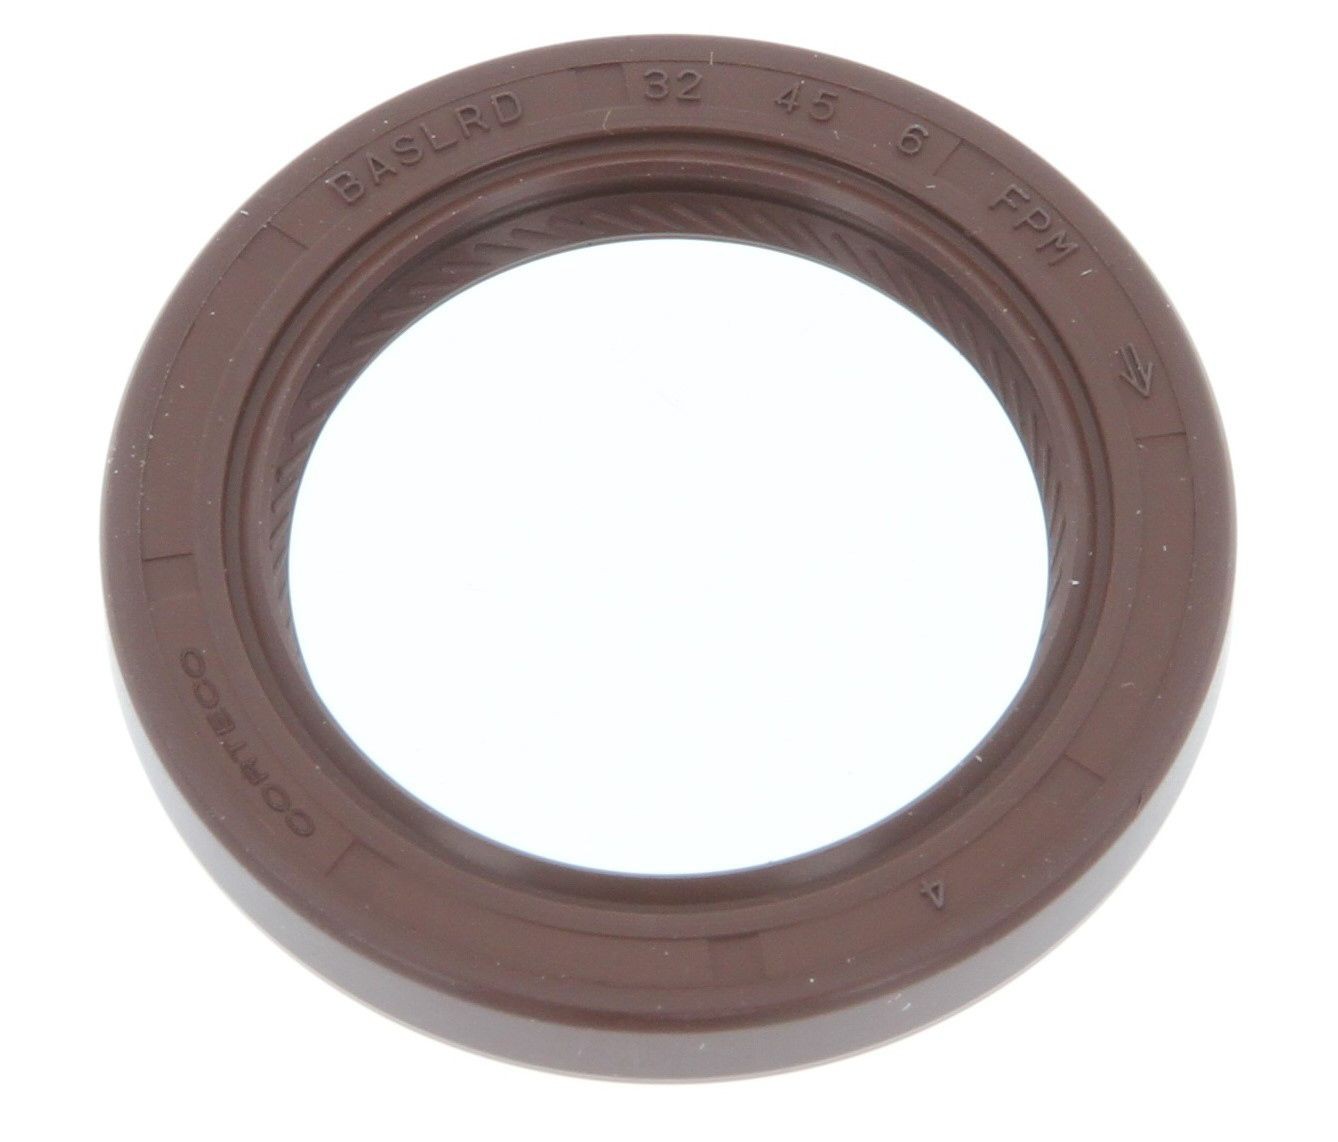 CORTECO 19036883B Crankshaft seal frontal sided, FPM (fluoride rubber)